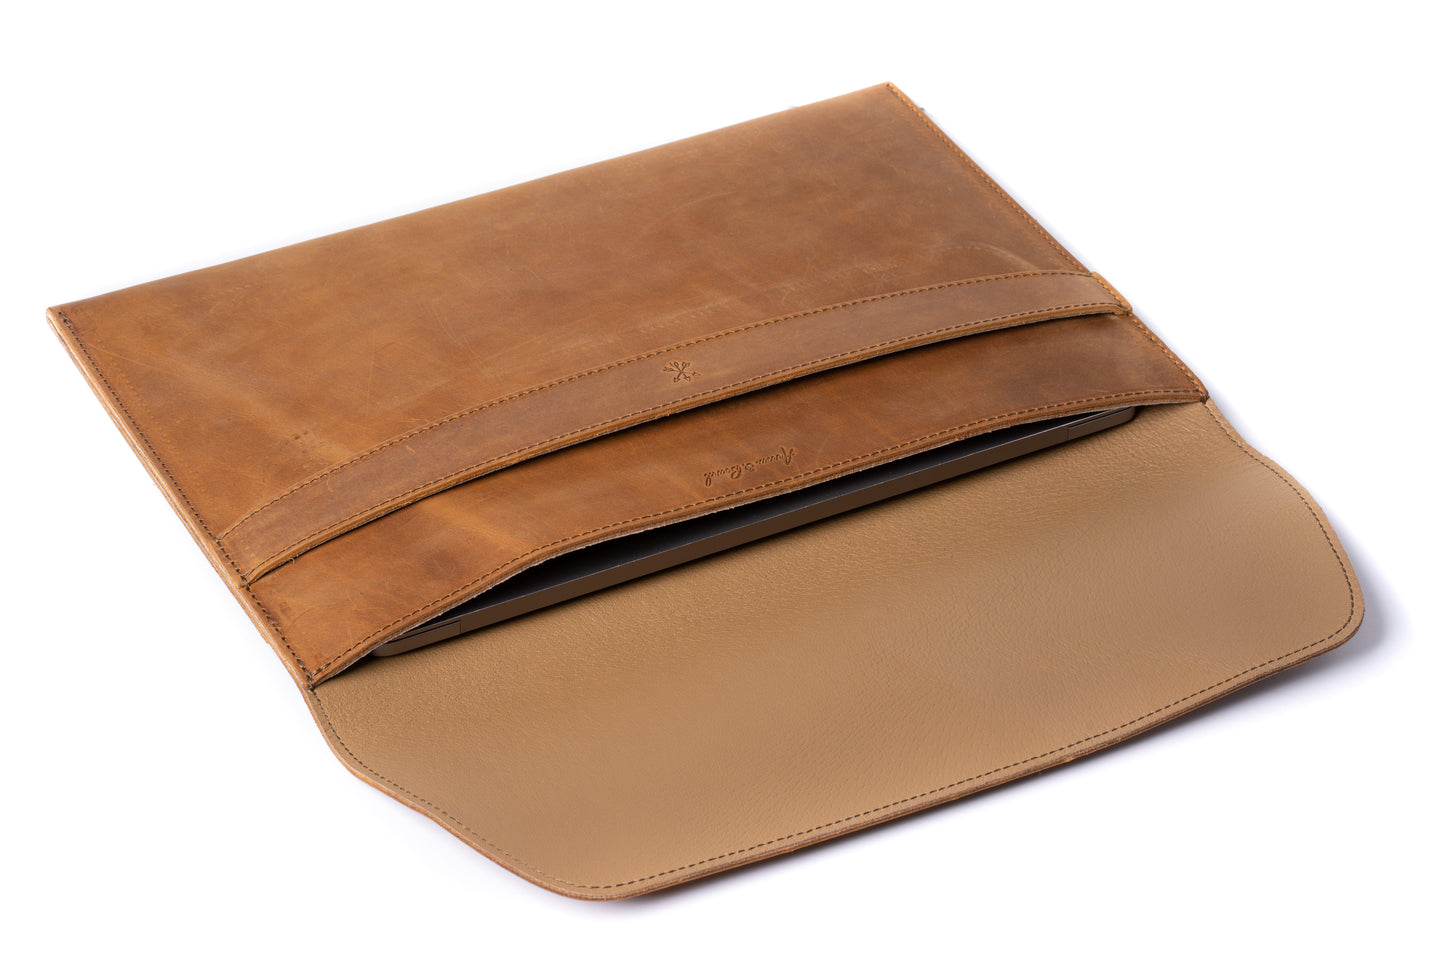 Leather MacBook Envelope Case - Tobacco